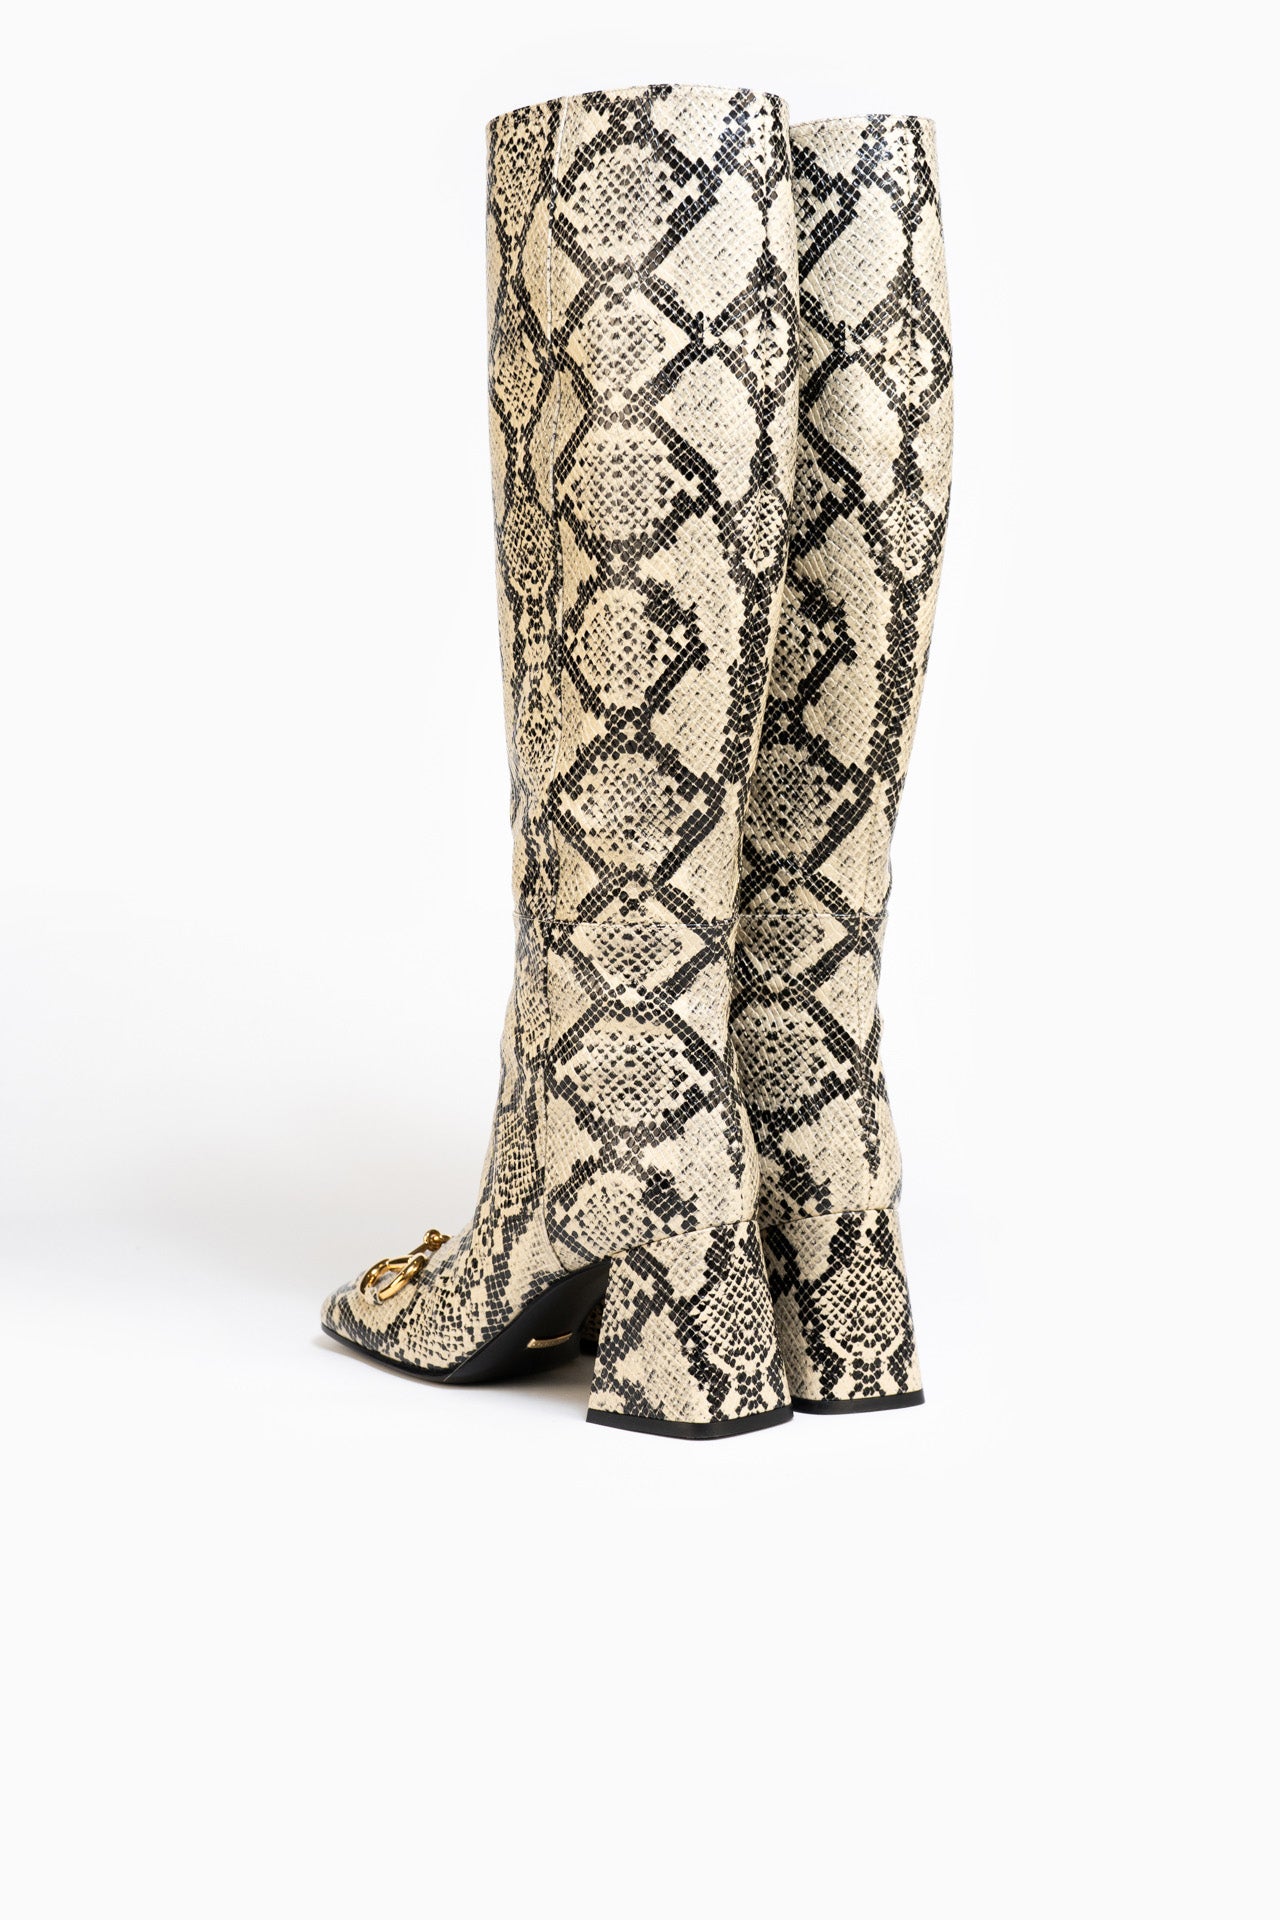 Gucci Horsebit Snake Print Knee-high Boots - Size 38